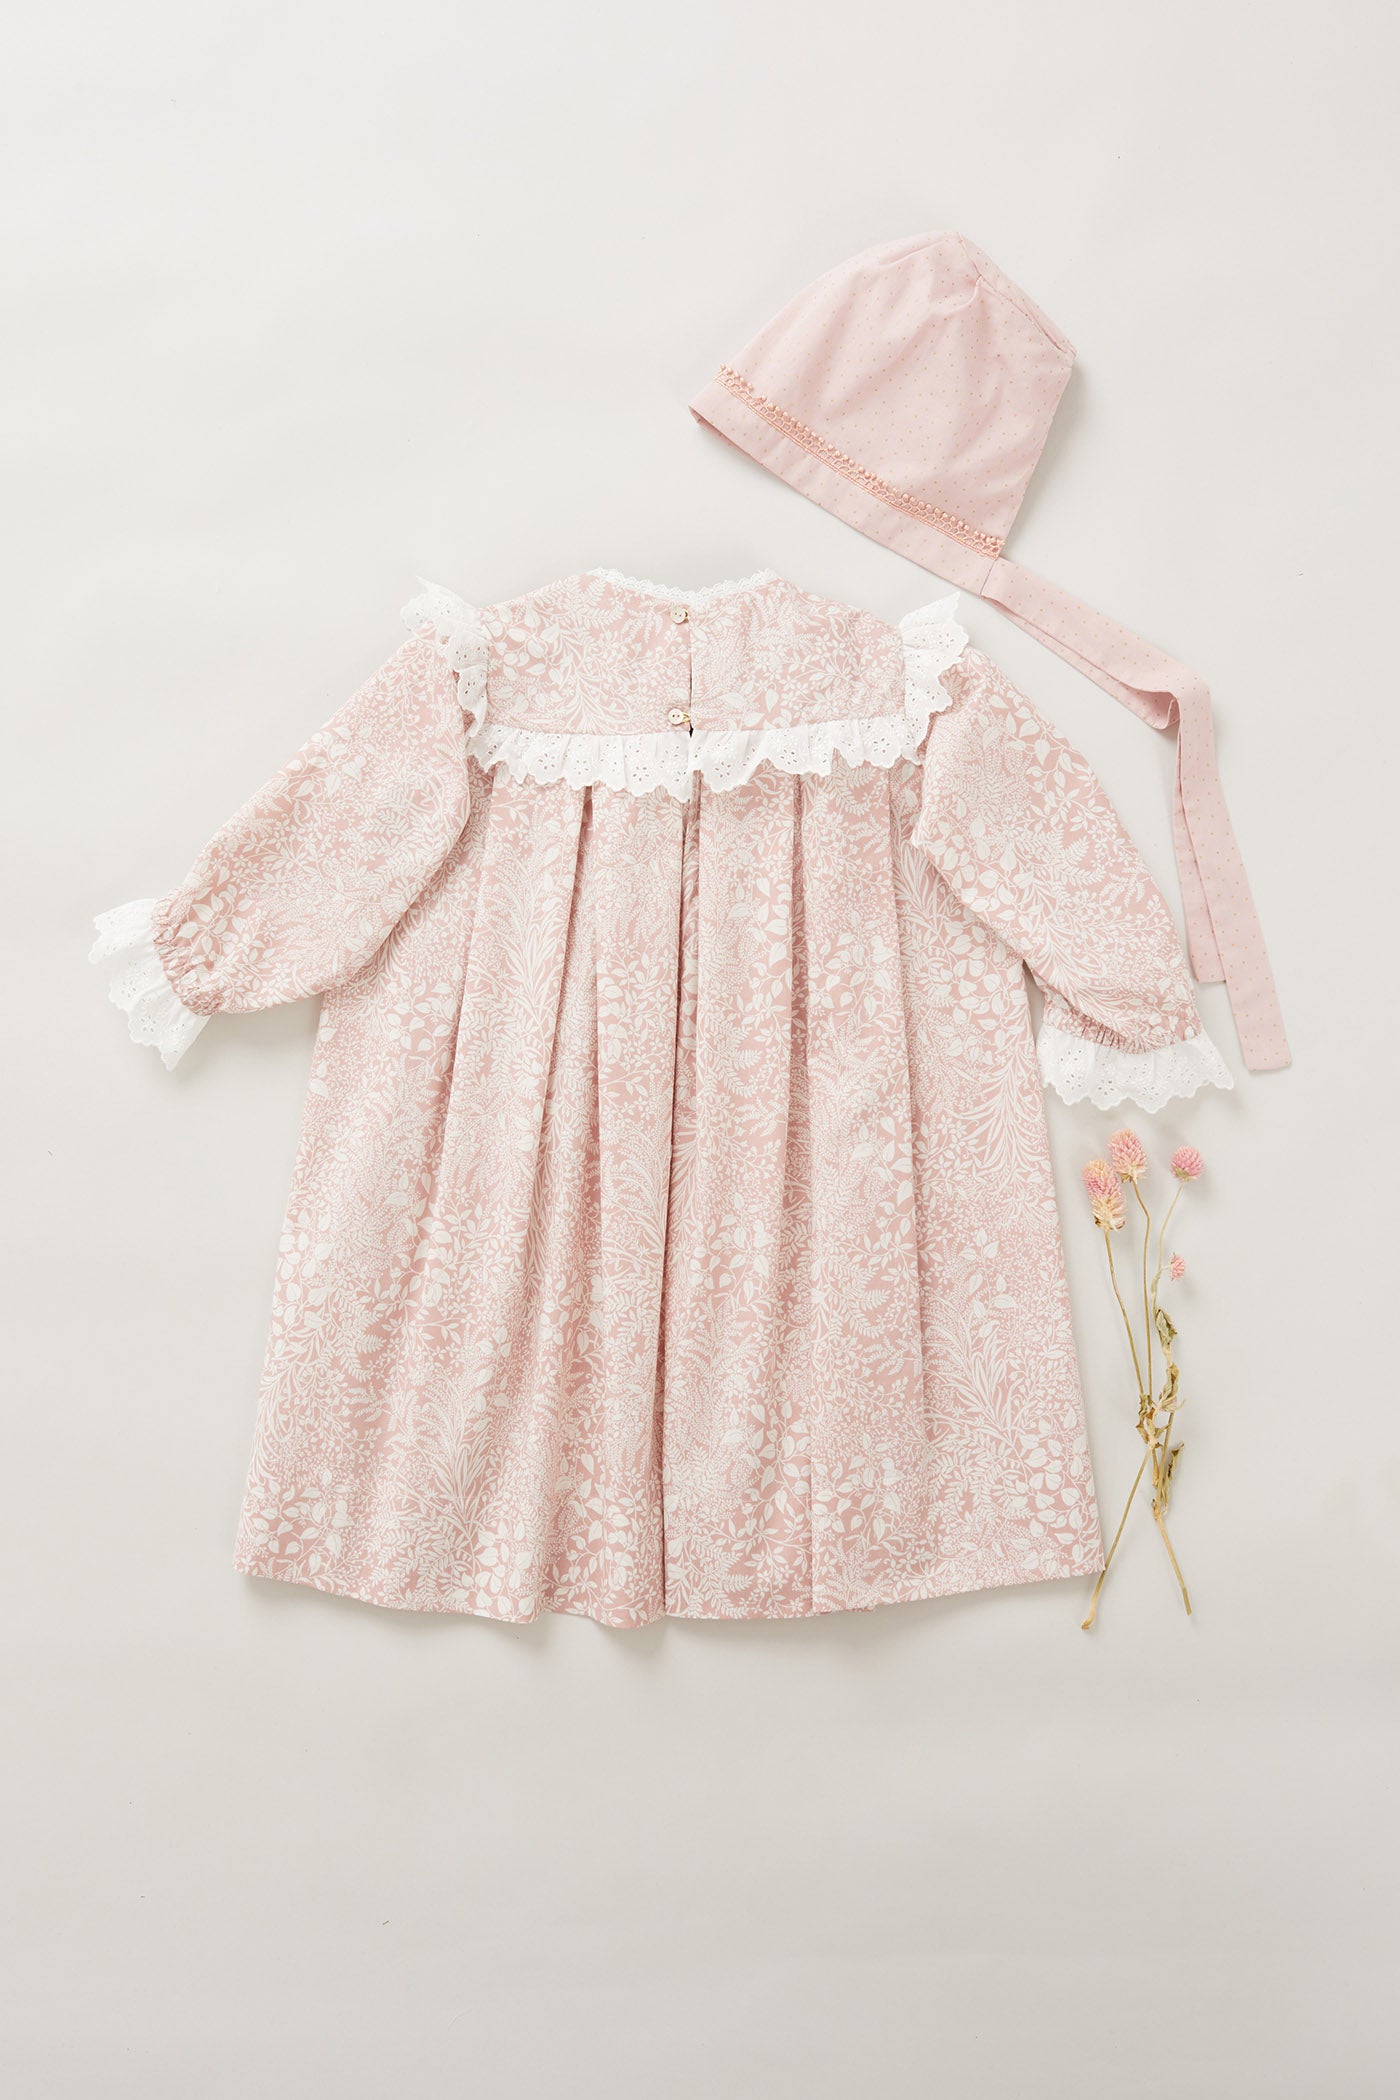 Brioche Dress Pink Powder Meadow